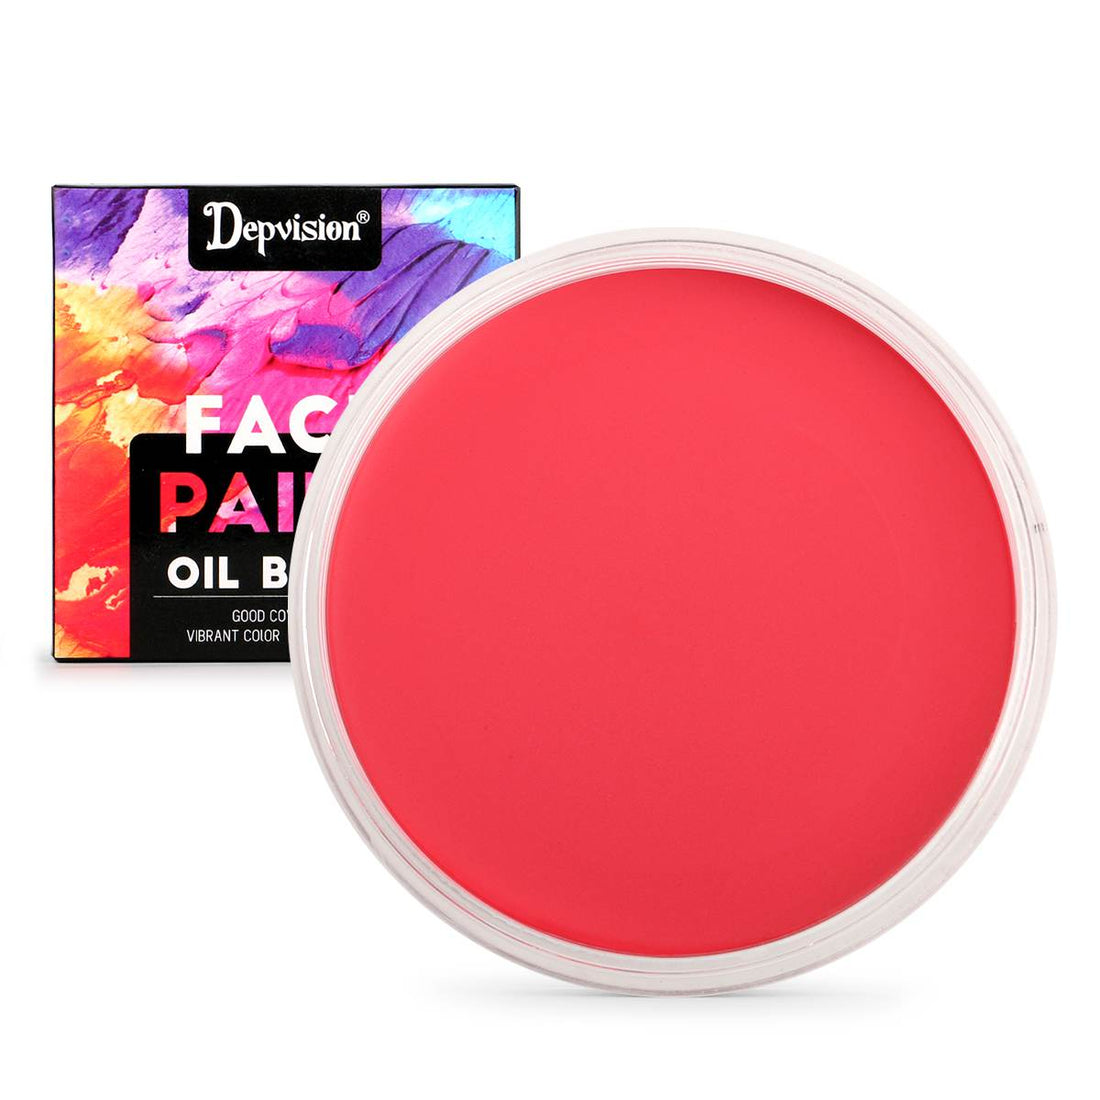 Waterproof Oil Based Face Paint - Pink